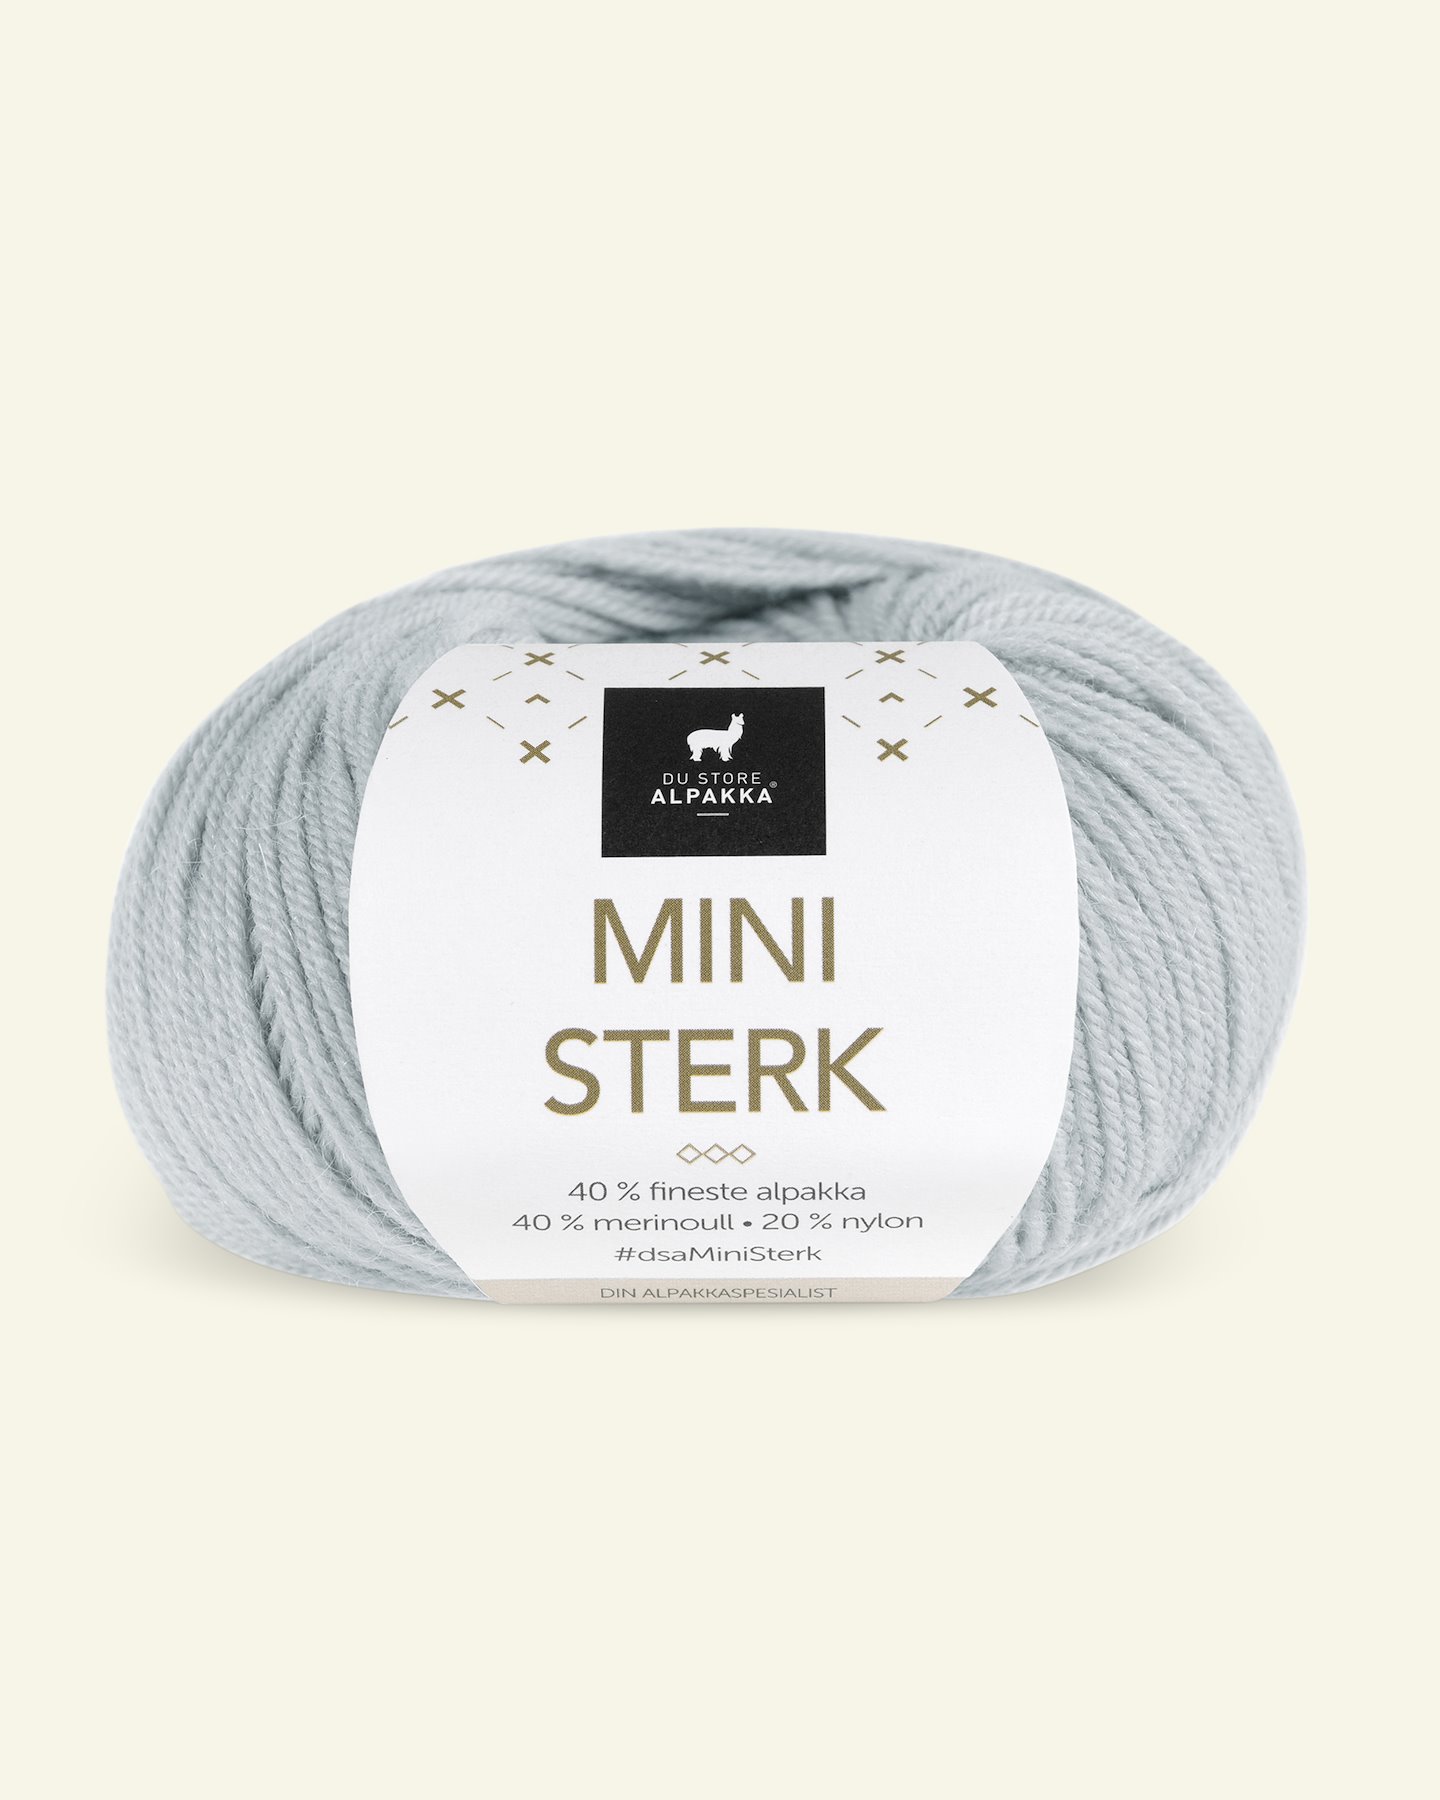 Du Store Alpakka,alpaca merino mixed yarn "Mini Sterk", light blue (848) 90000634_pack